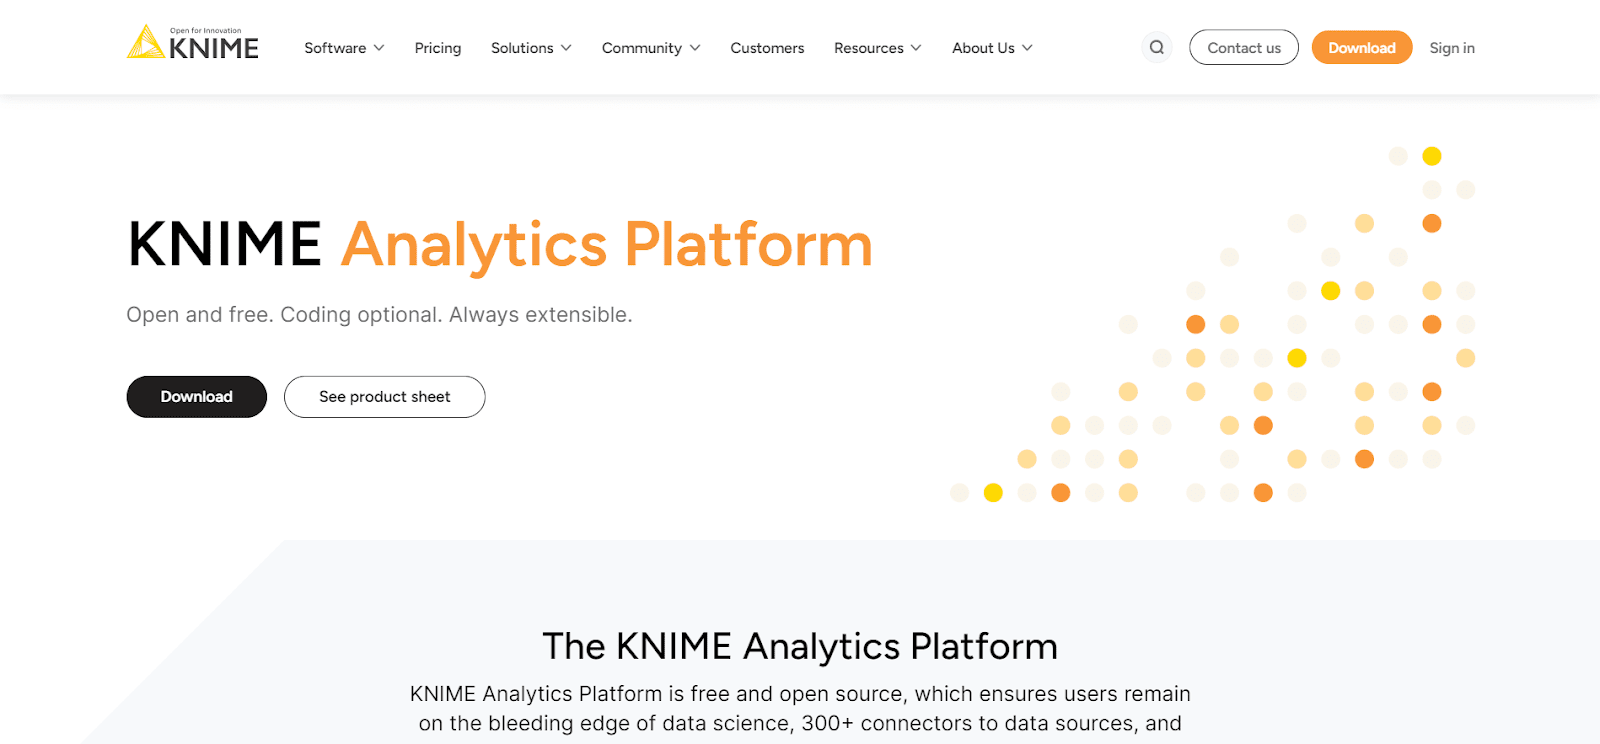 A screenshot of KNIME's website